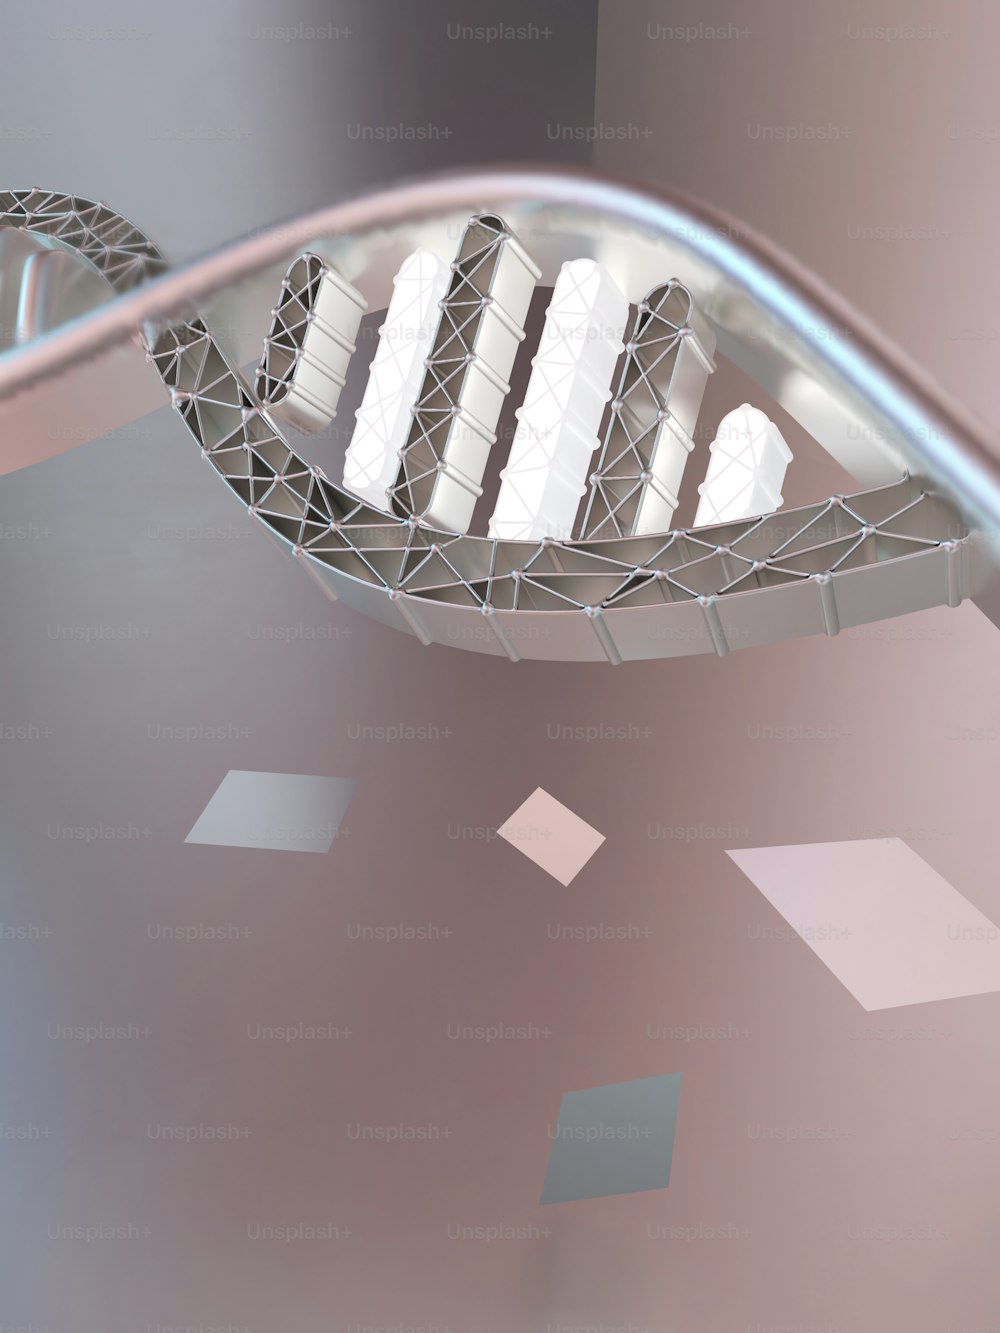 Un'immagine 3D di una struttura con un design a spirale